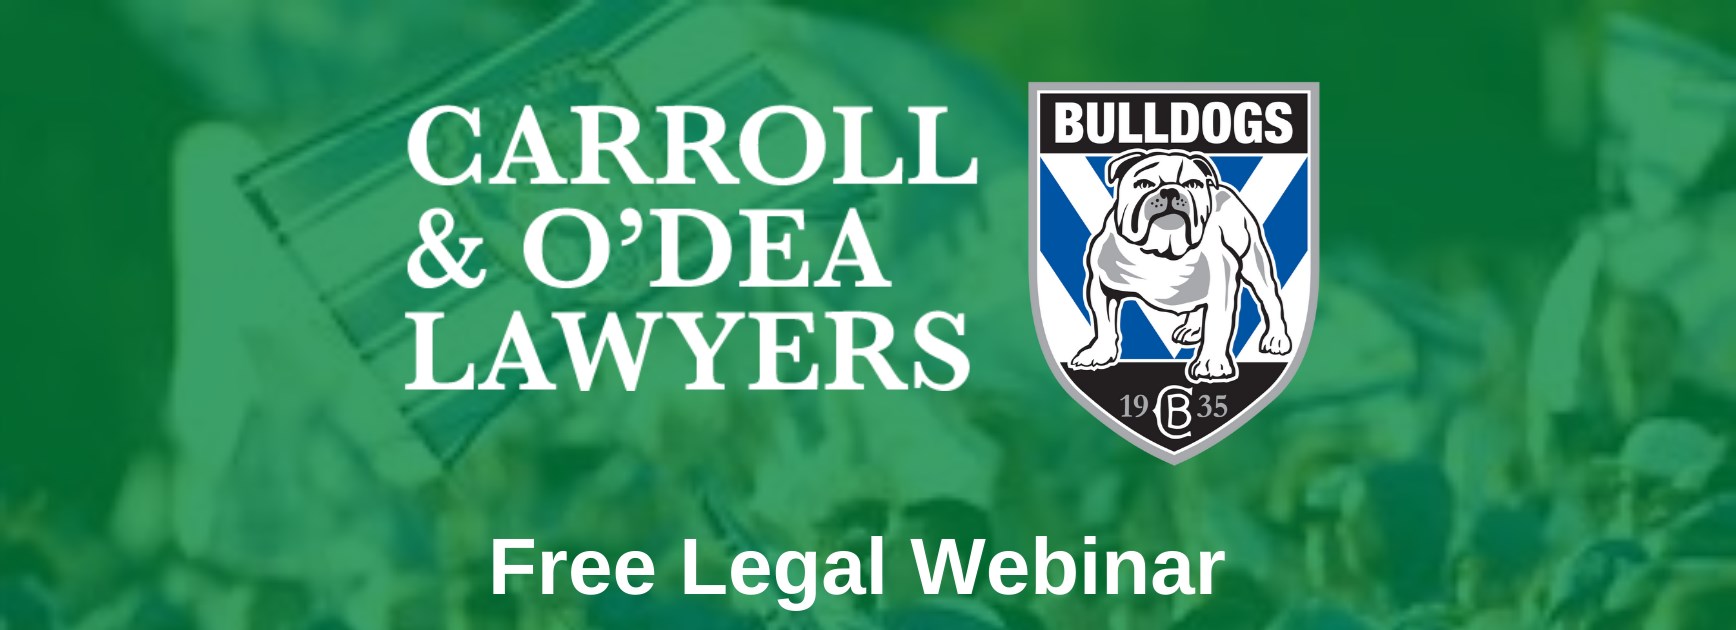 Carroll & O’Dea Lawyers Free Legal Webinar